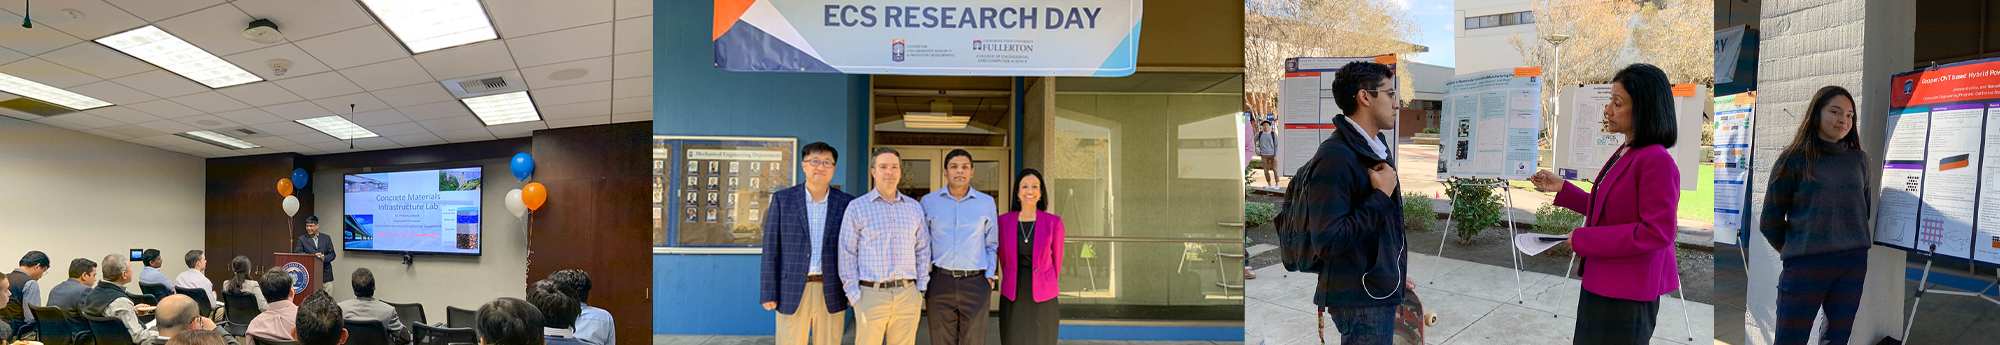 ECS Research Day